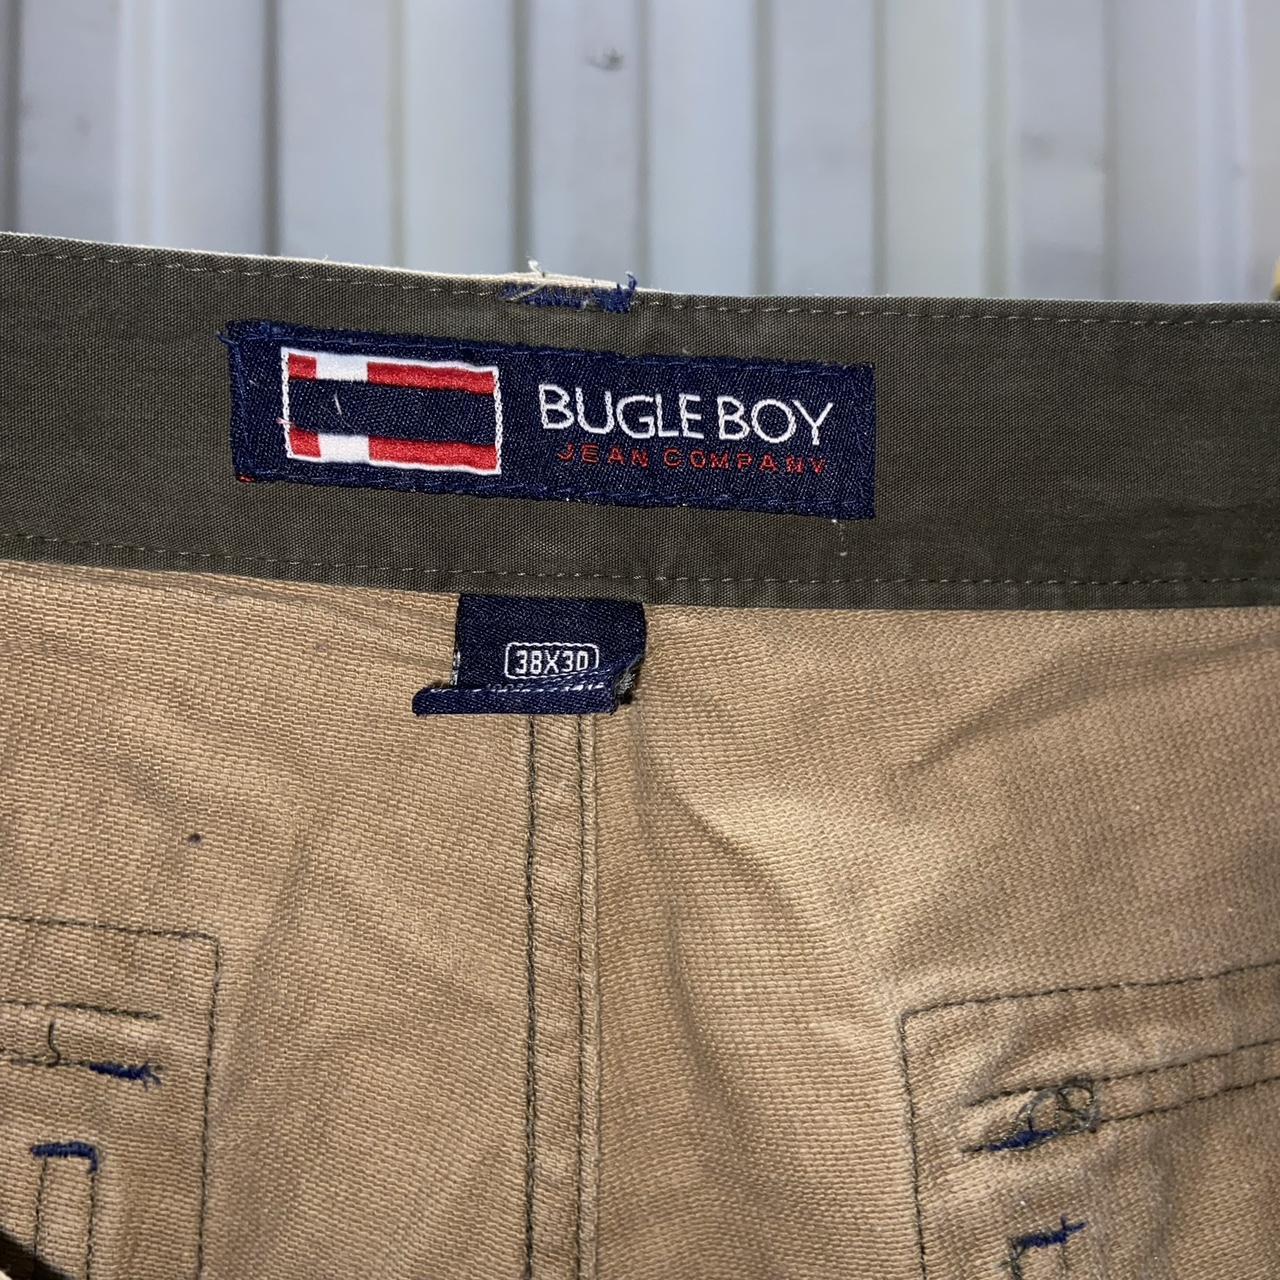 Casual Bugle Boy Cargo Pants Good Condition... - Depop